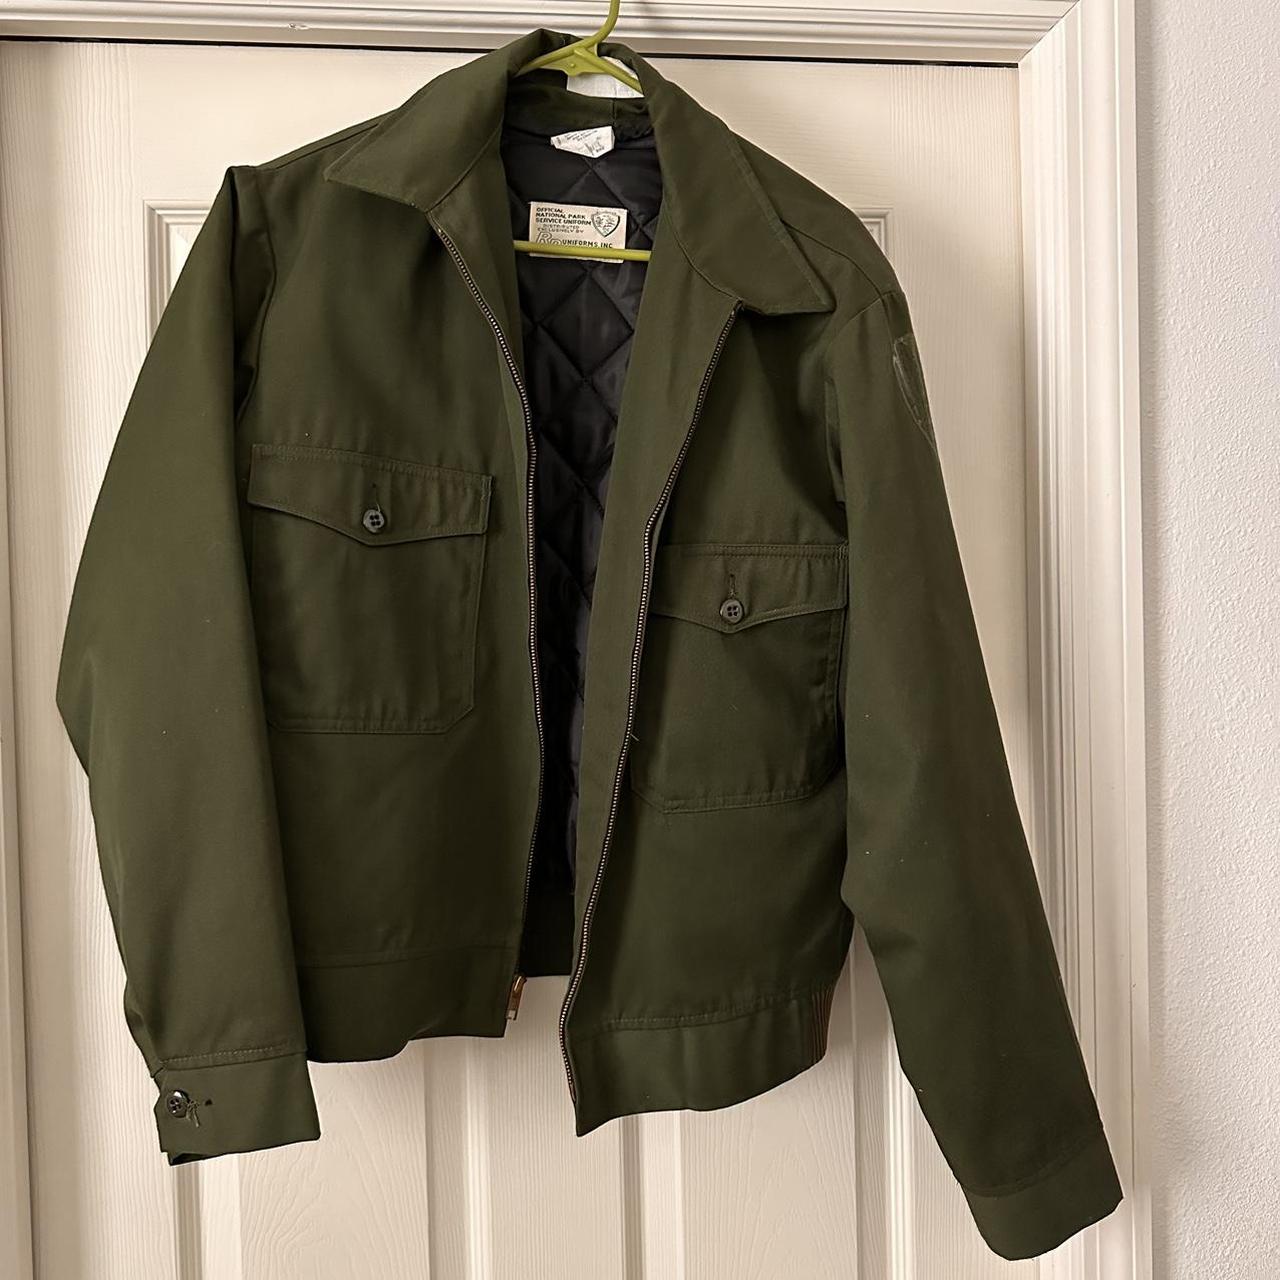 Official National Park Service Uniform Jacket, size... - Depop